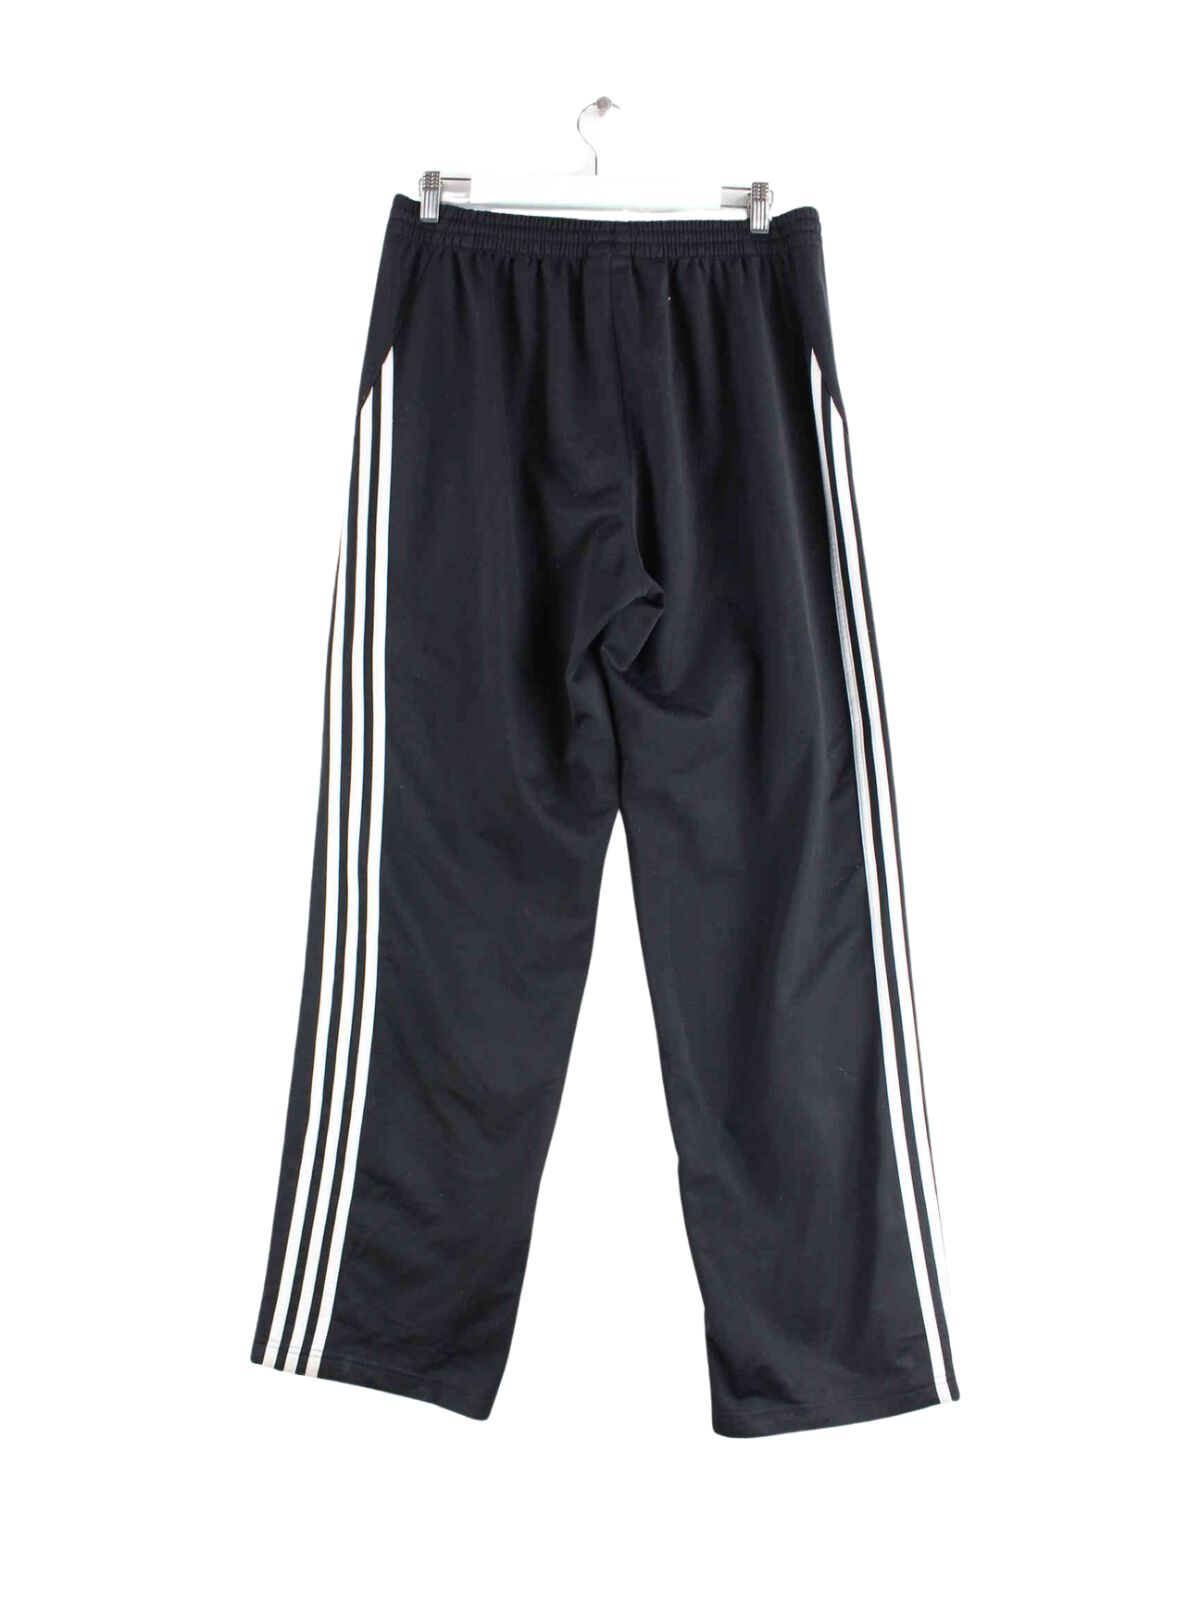 Adidas y2k 3-Stripes Track Pants Schwarz M (back image)